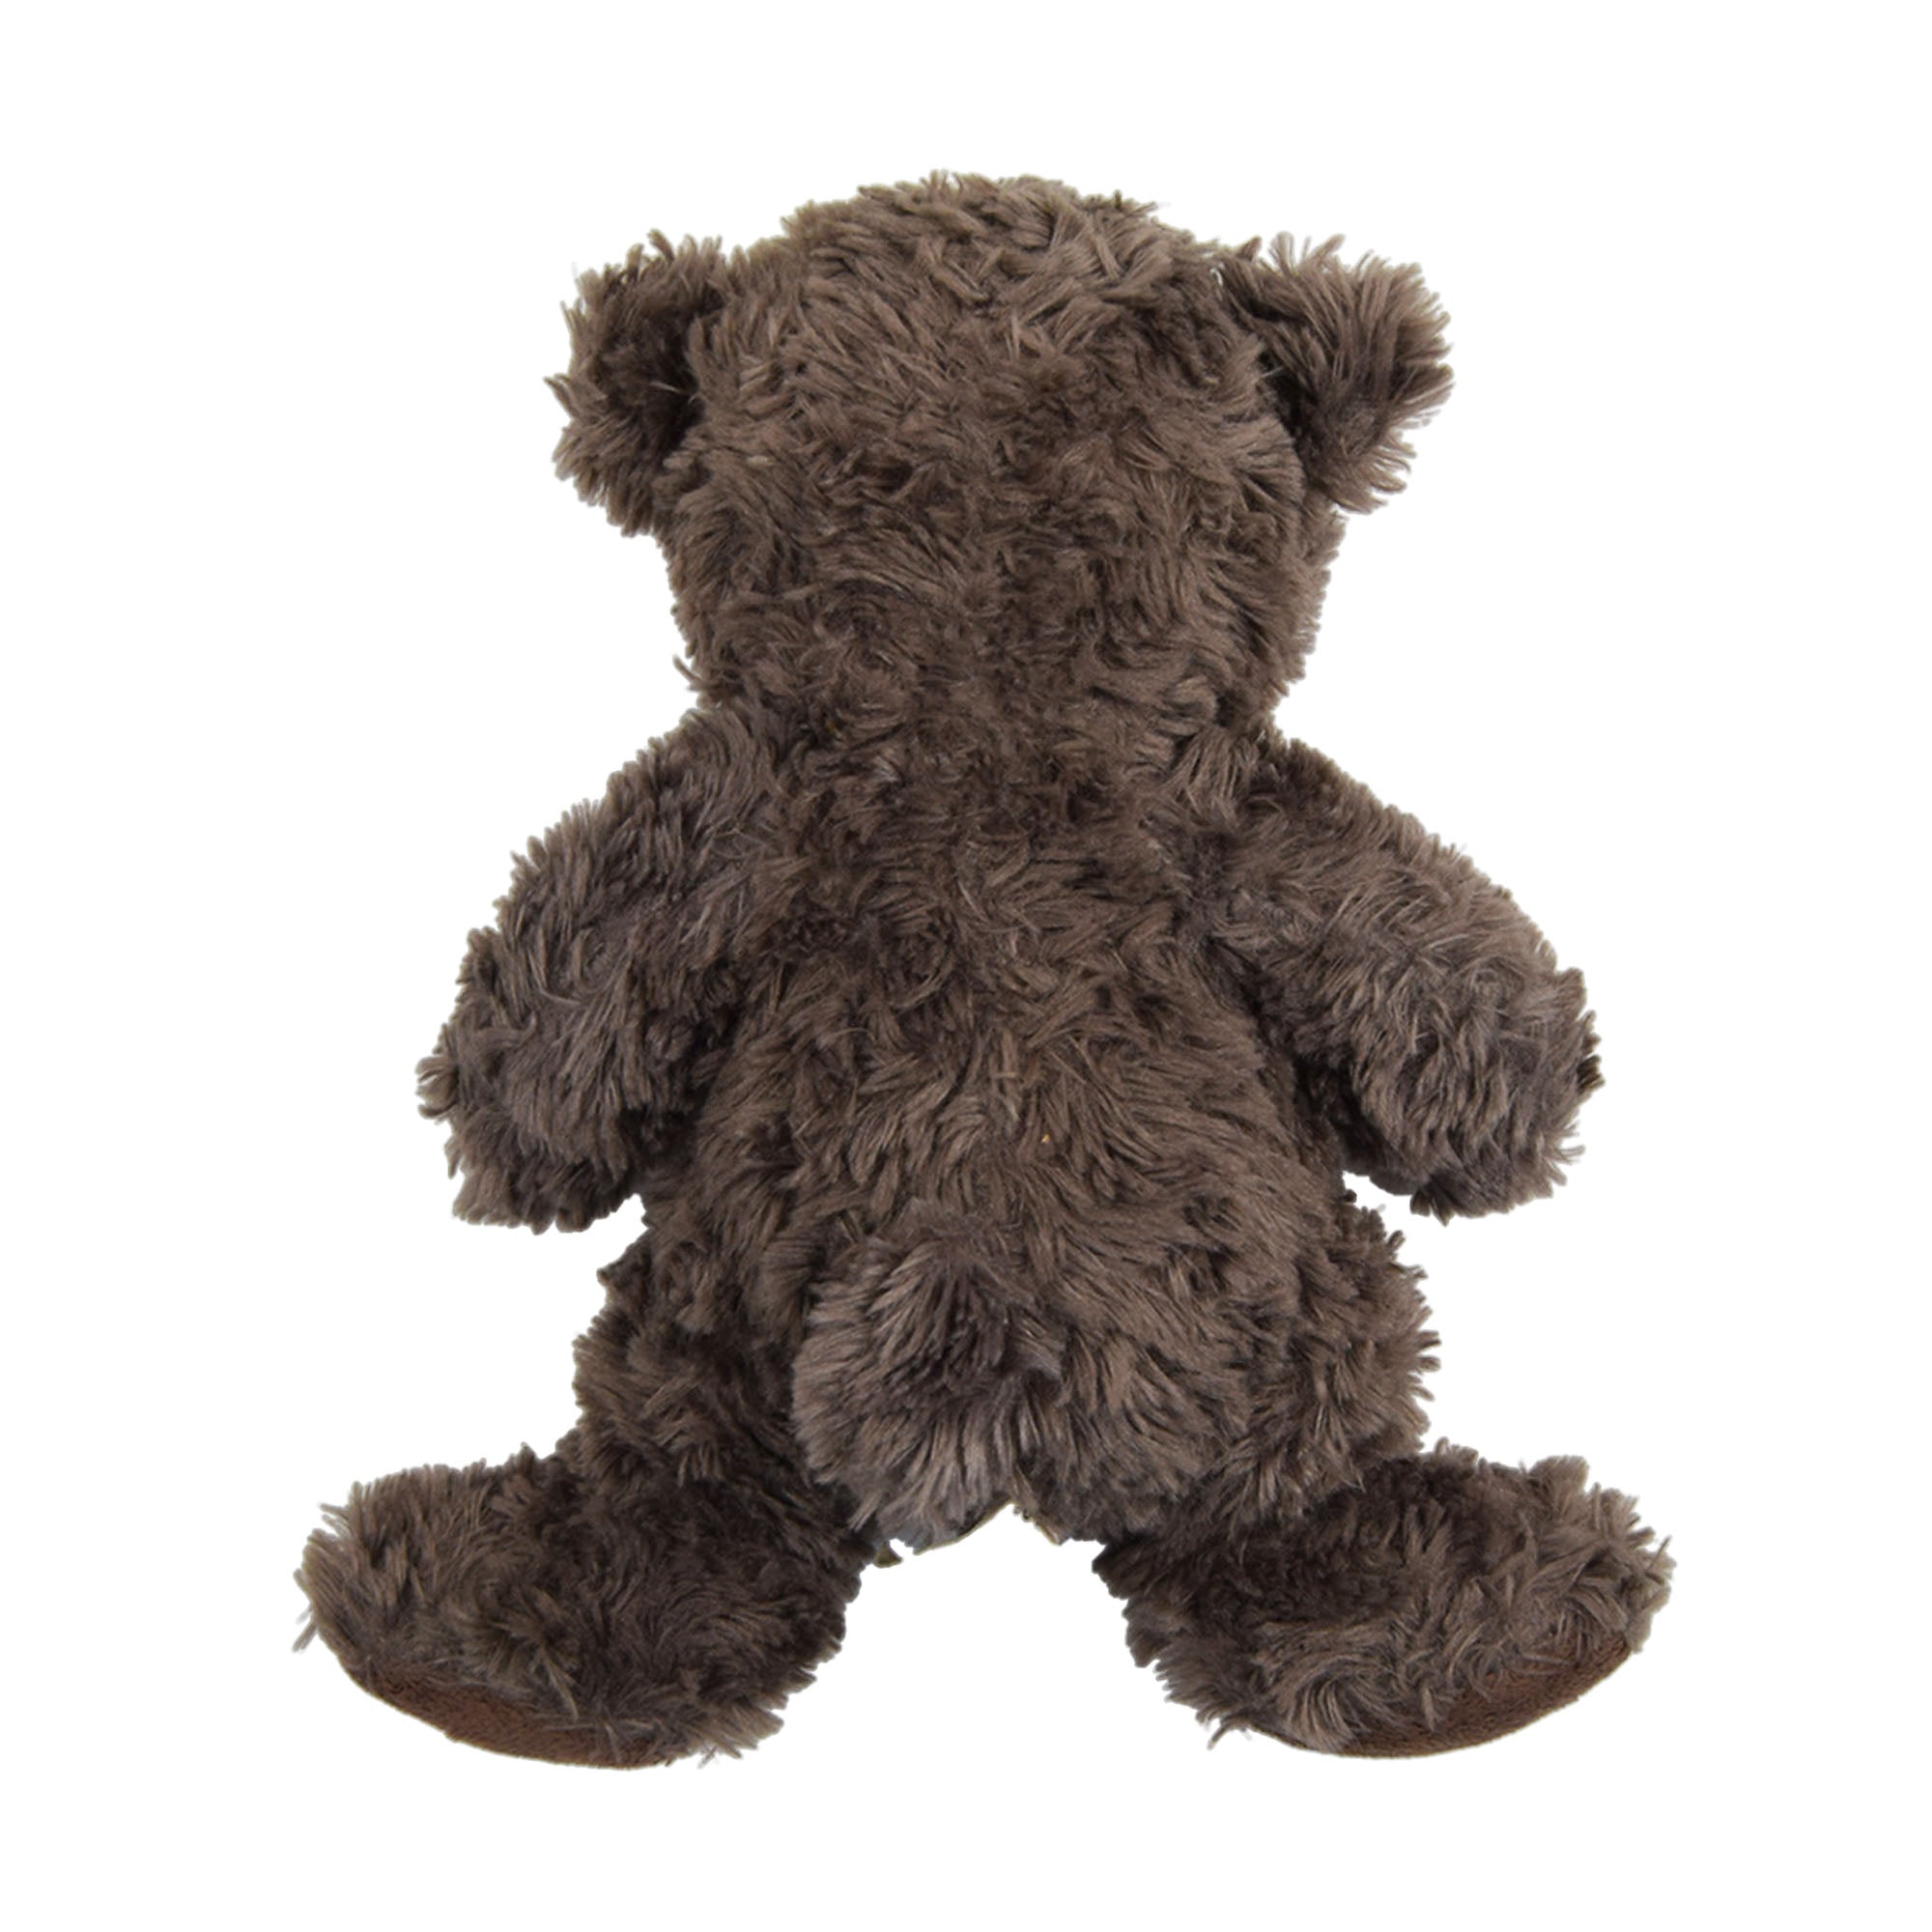 Teddy Bear Cuddly Soft Brown Bear Stuffed Animal Toy For Kids